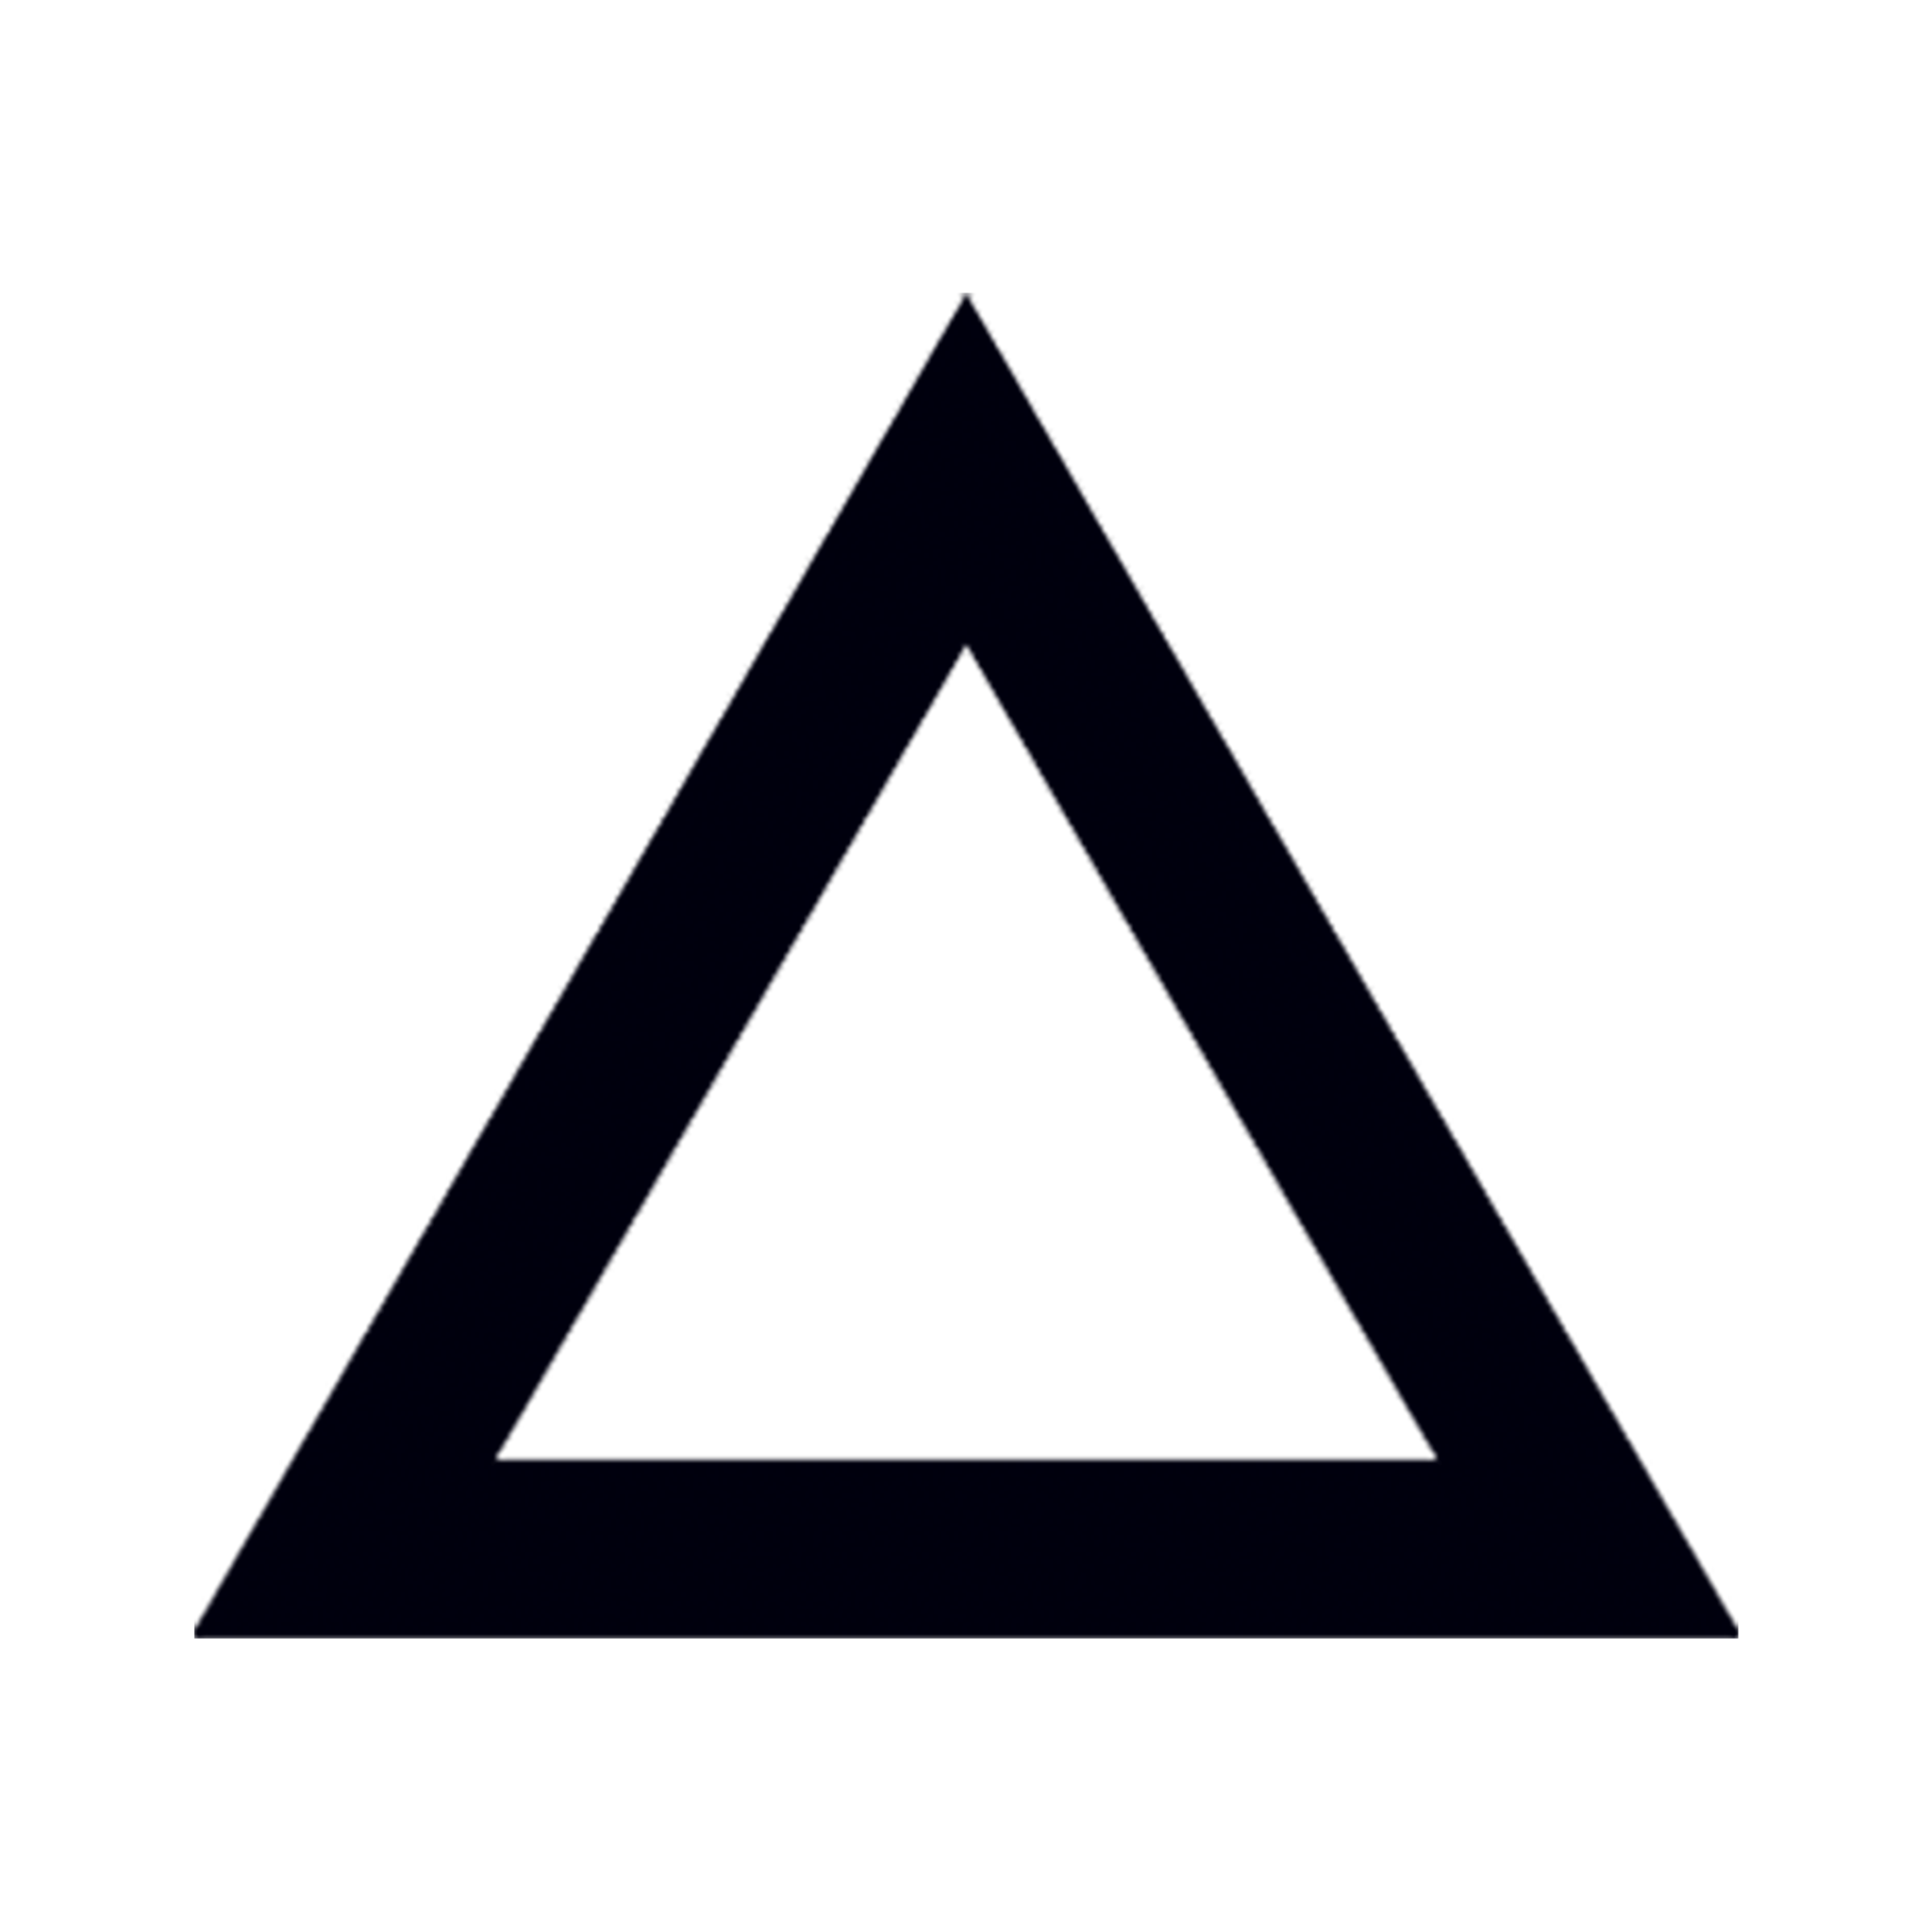 Triângulo